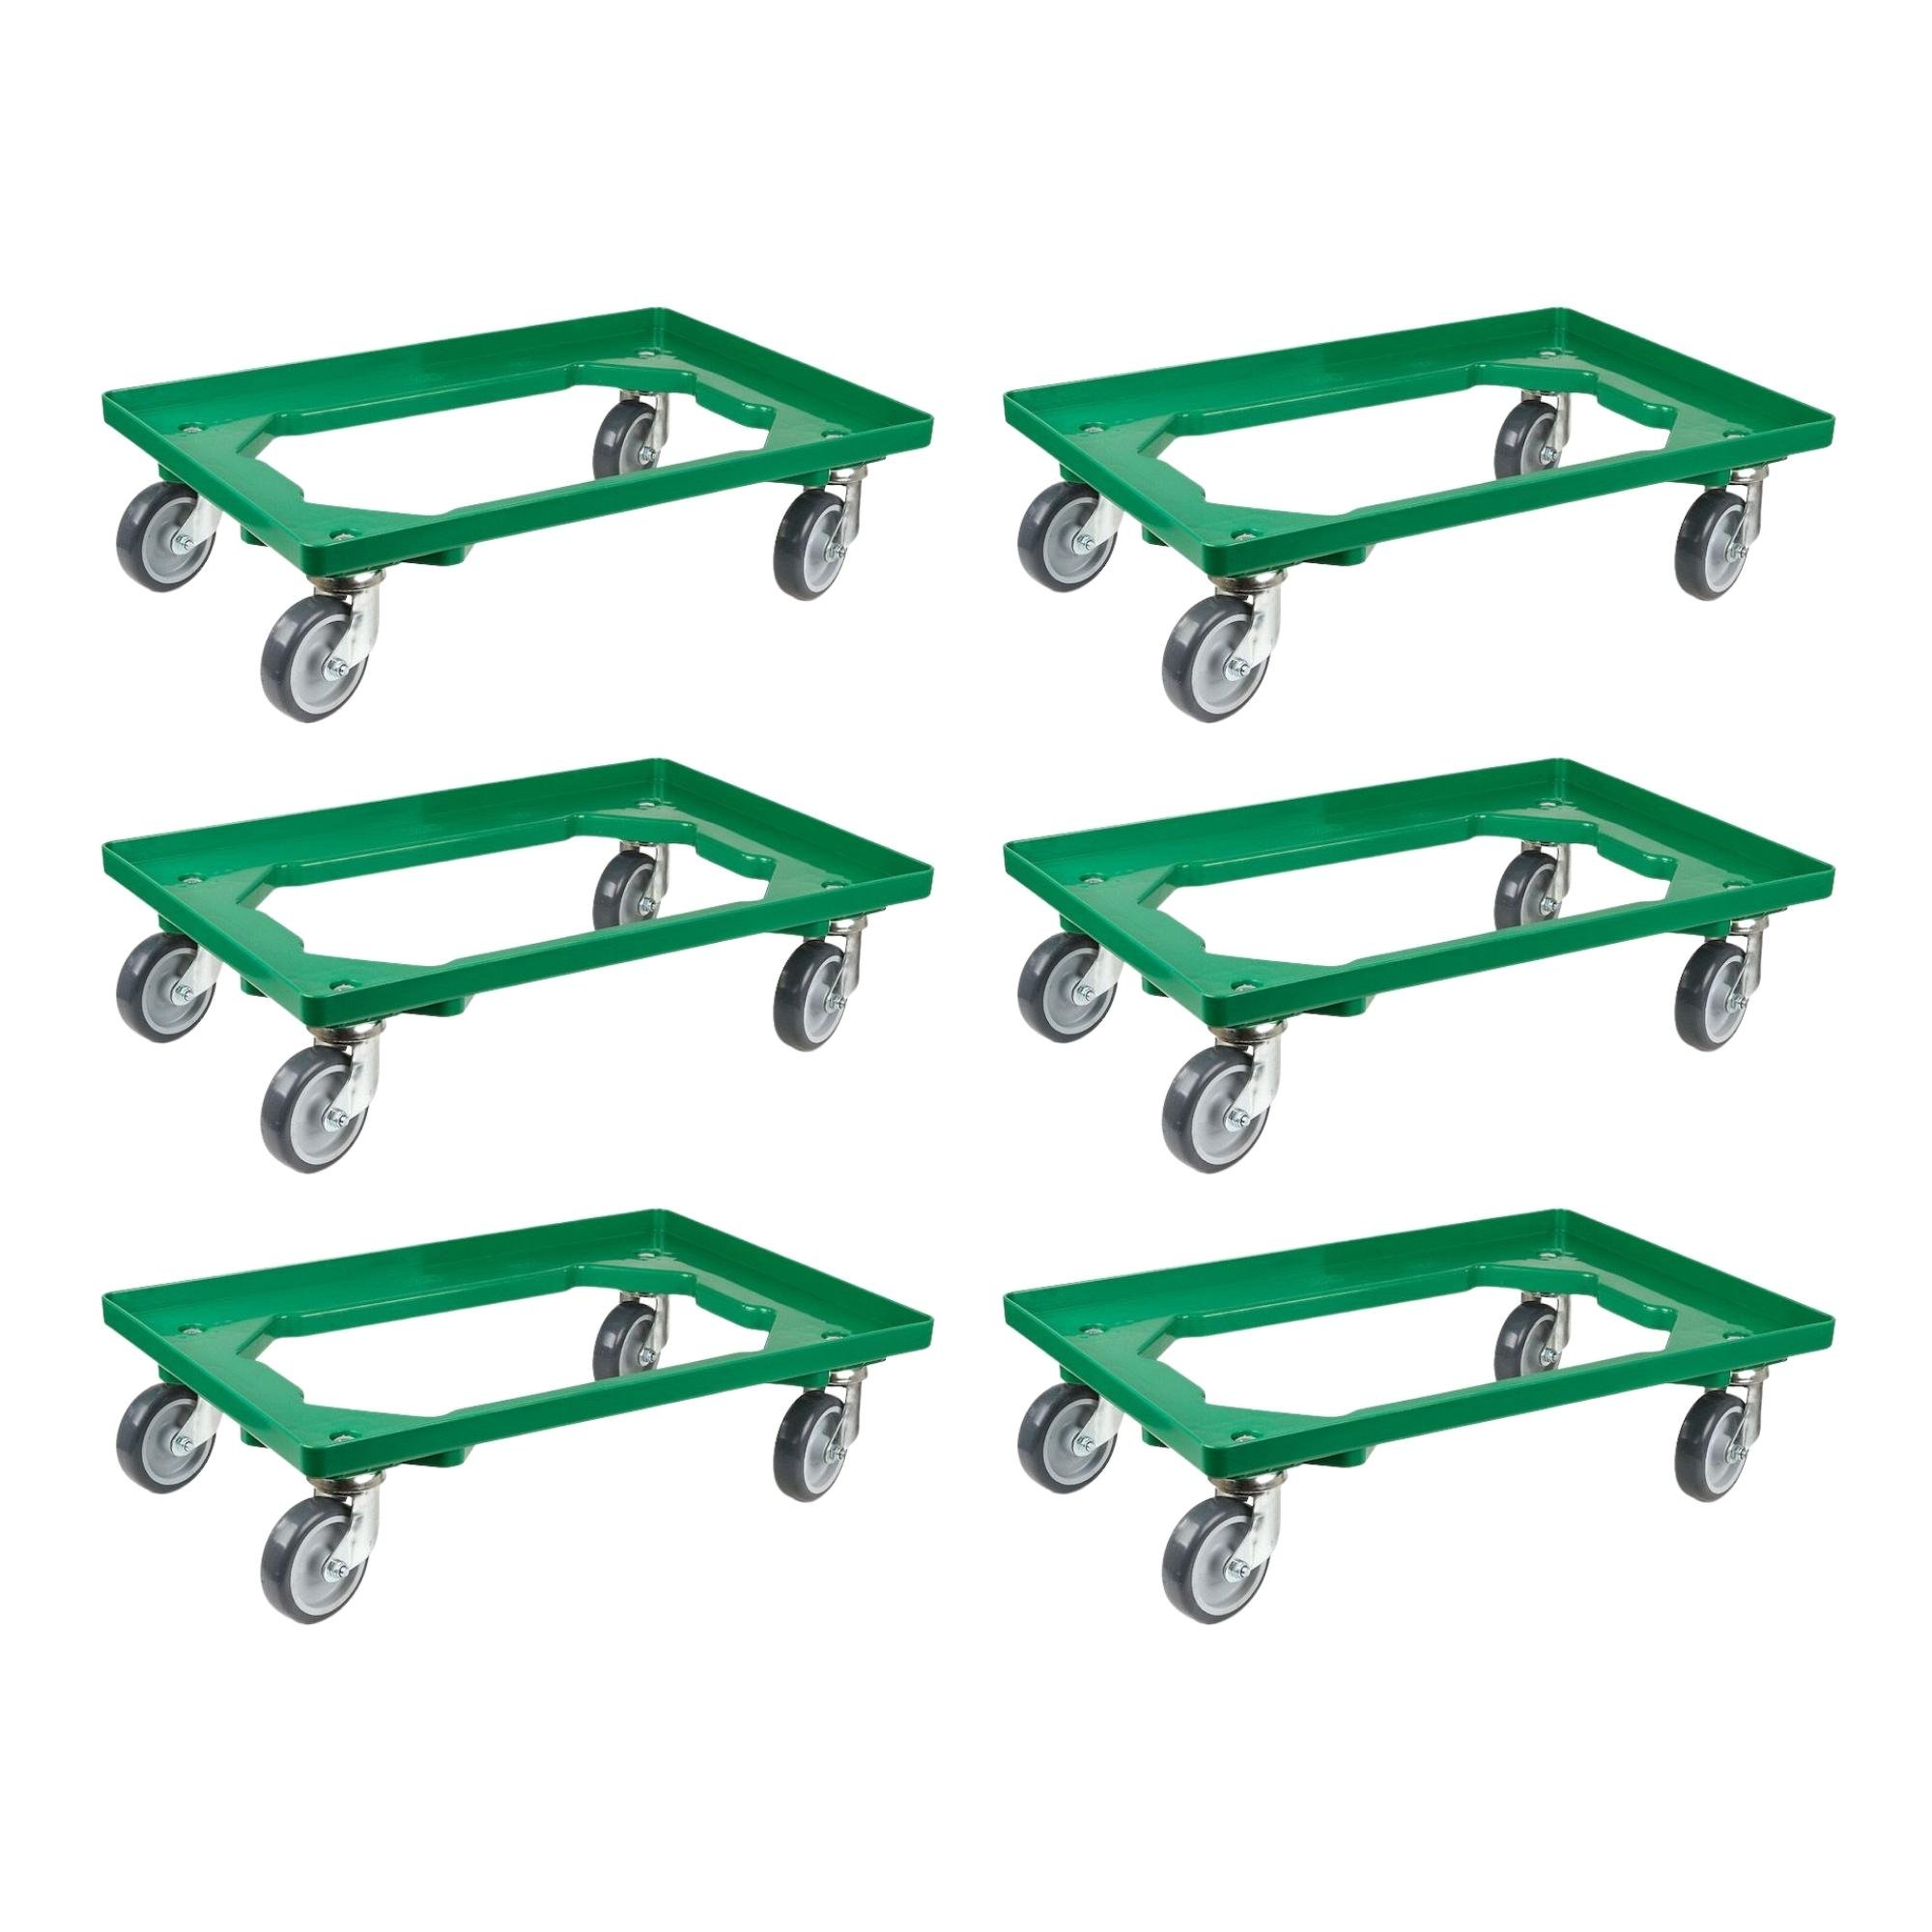 SparSet 6x Transportroller für Euroboxen 60x40cm mit Gummiräder grün | Offenes Deck | 2 Lenkrollen & 2 Bockrollen | Traglast 300kg | Kistenroller Logistikroller Rollwagen Profi-Fahrgestell